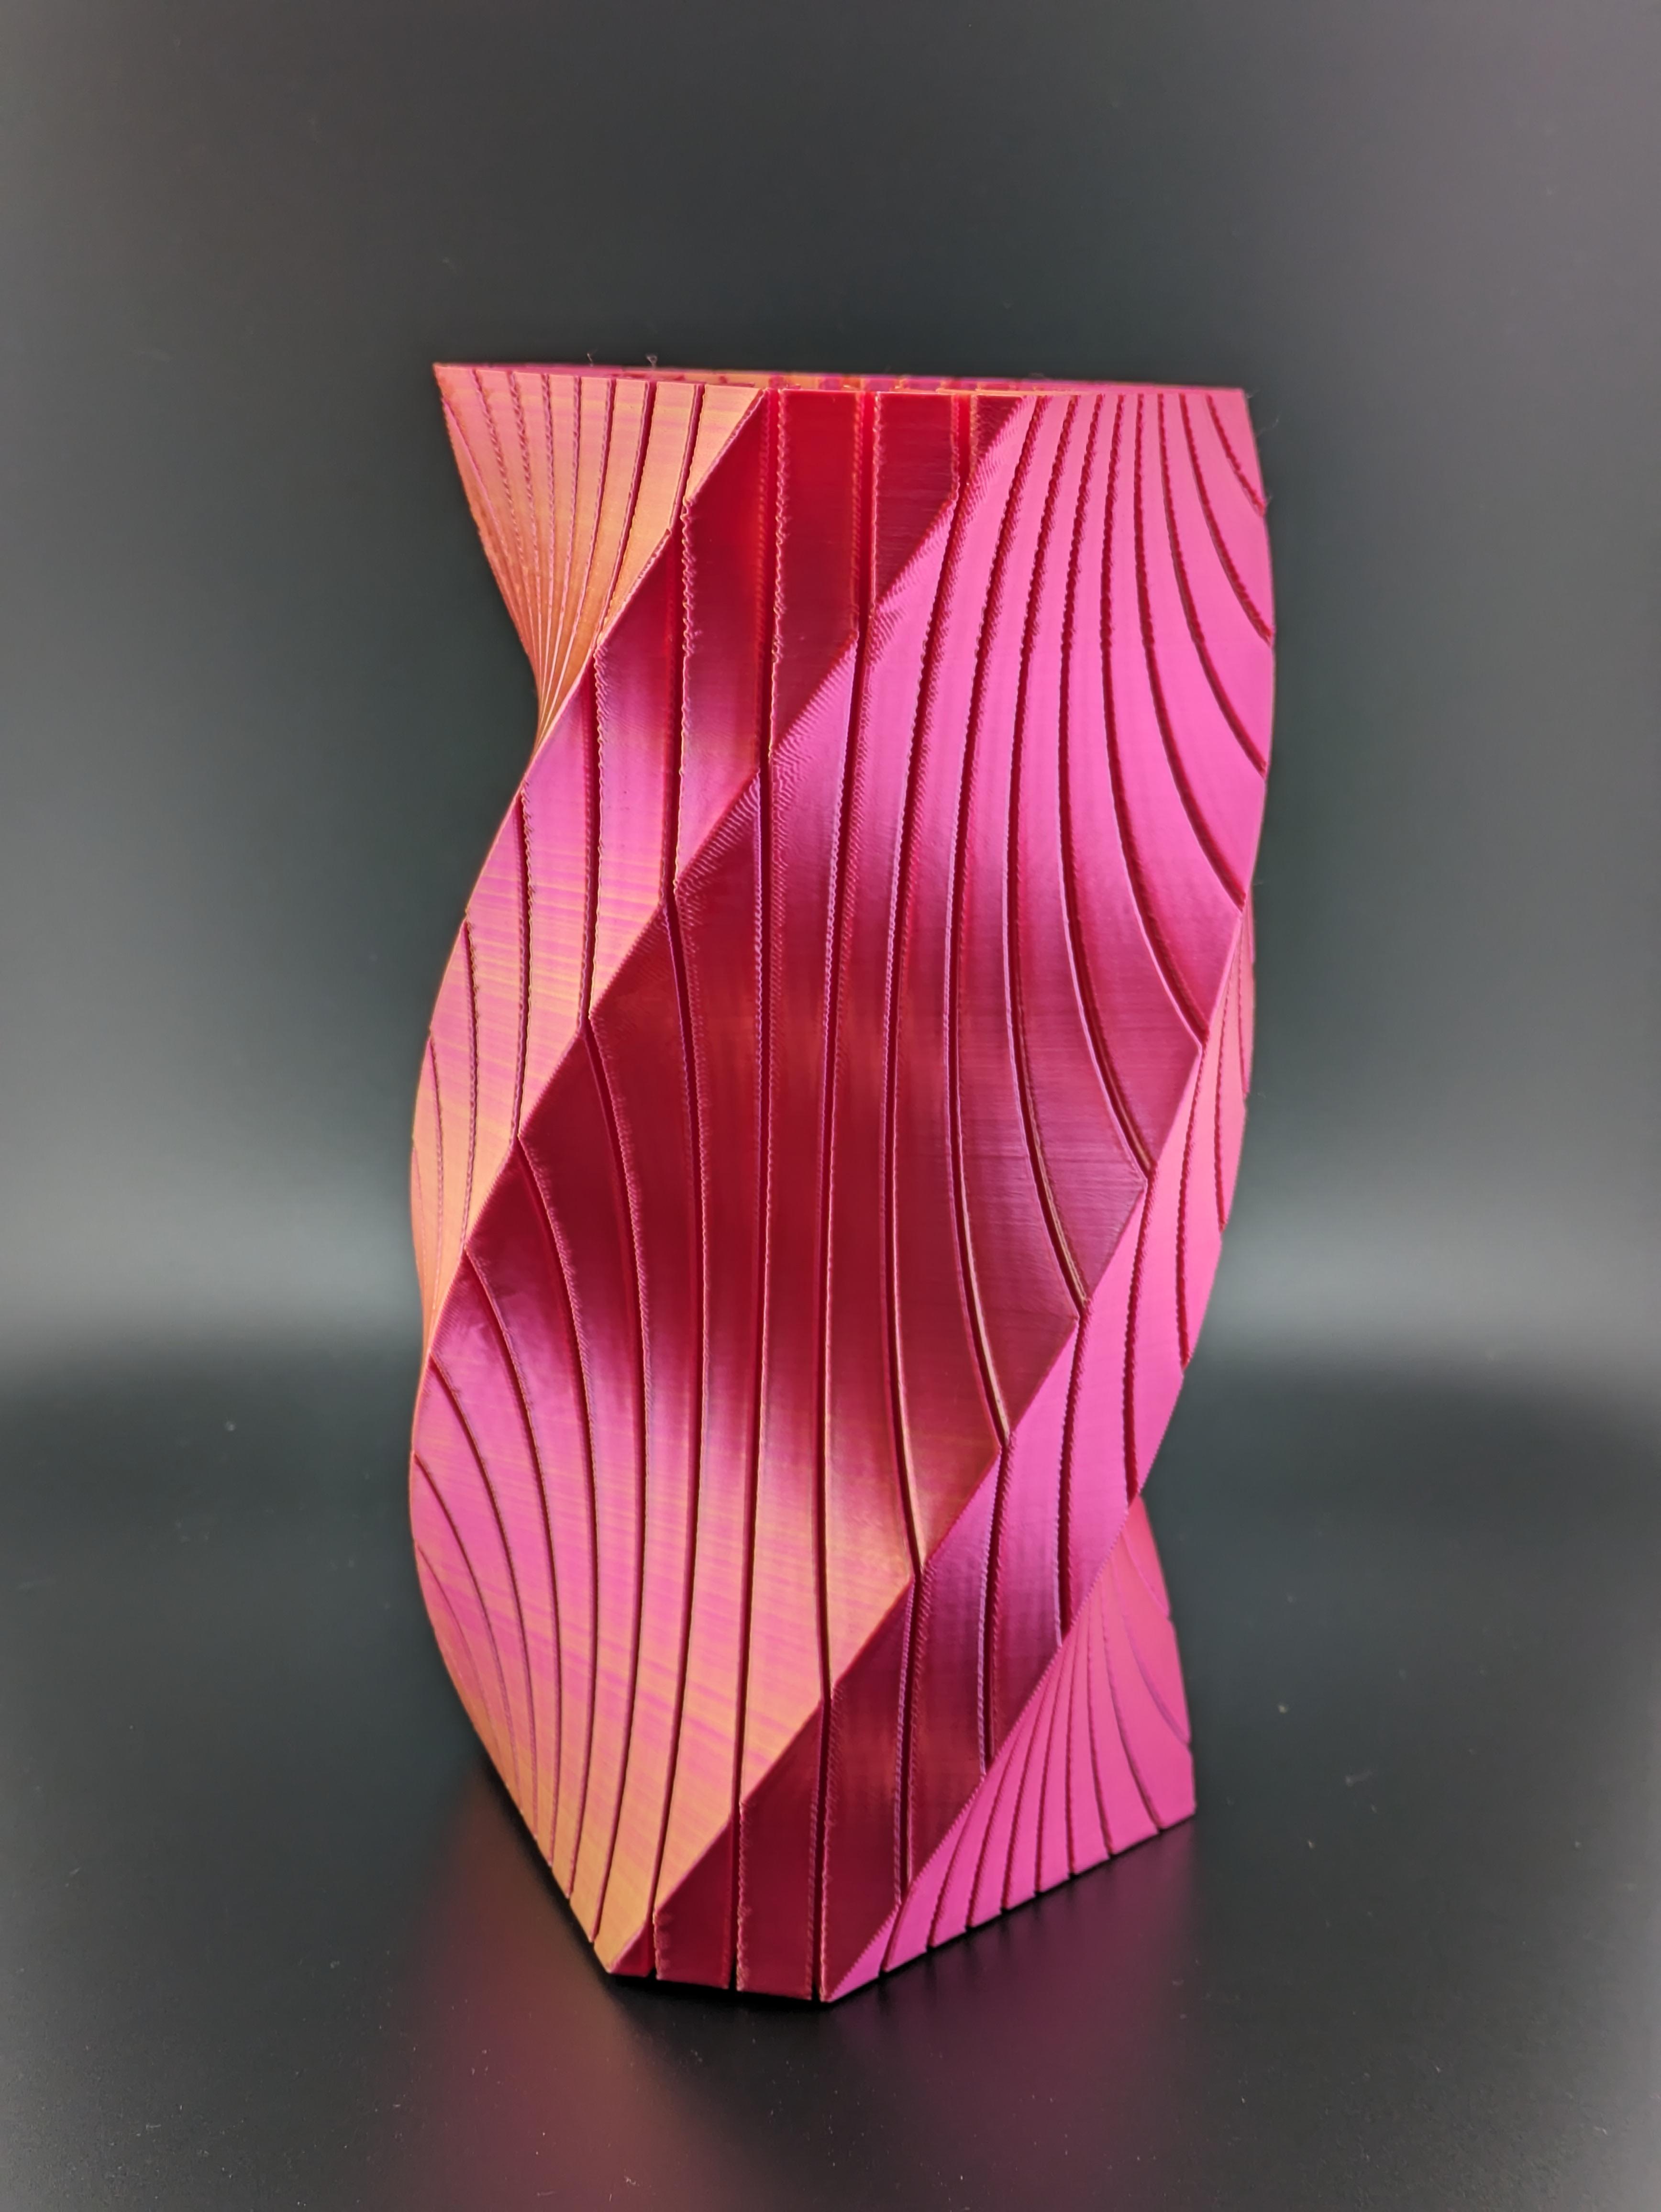 Twisted Triangular Vase 3d model